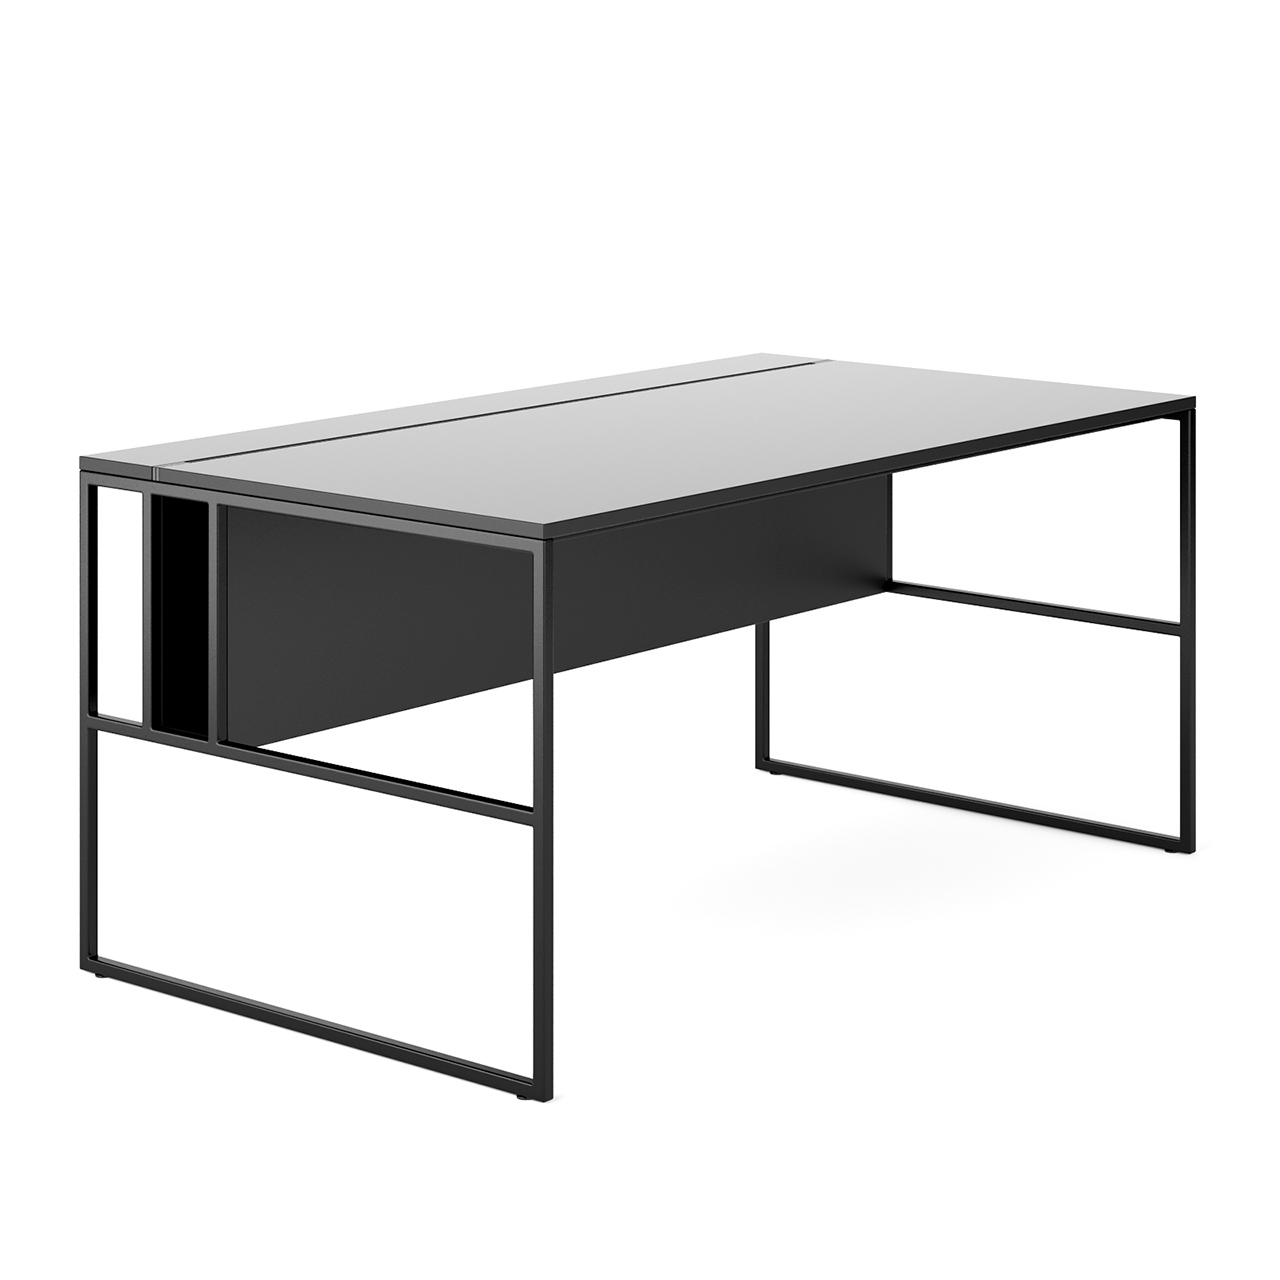 Venti Single Office Elegant Desk ☞ Structure: Matt Painted Graphite Grey X054 ☞ Top: Fenix Matt White X020 ☞ Dimensions: Width 160 cm